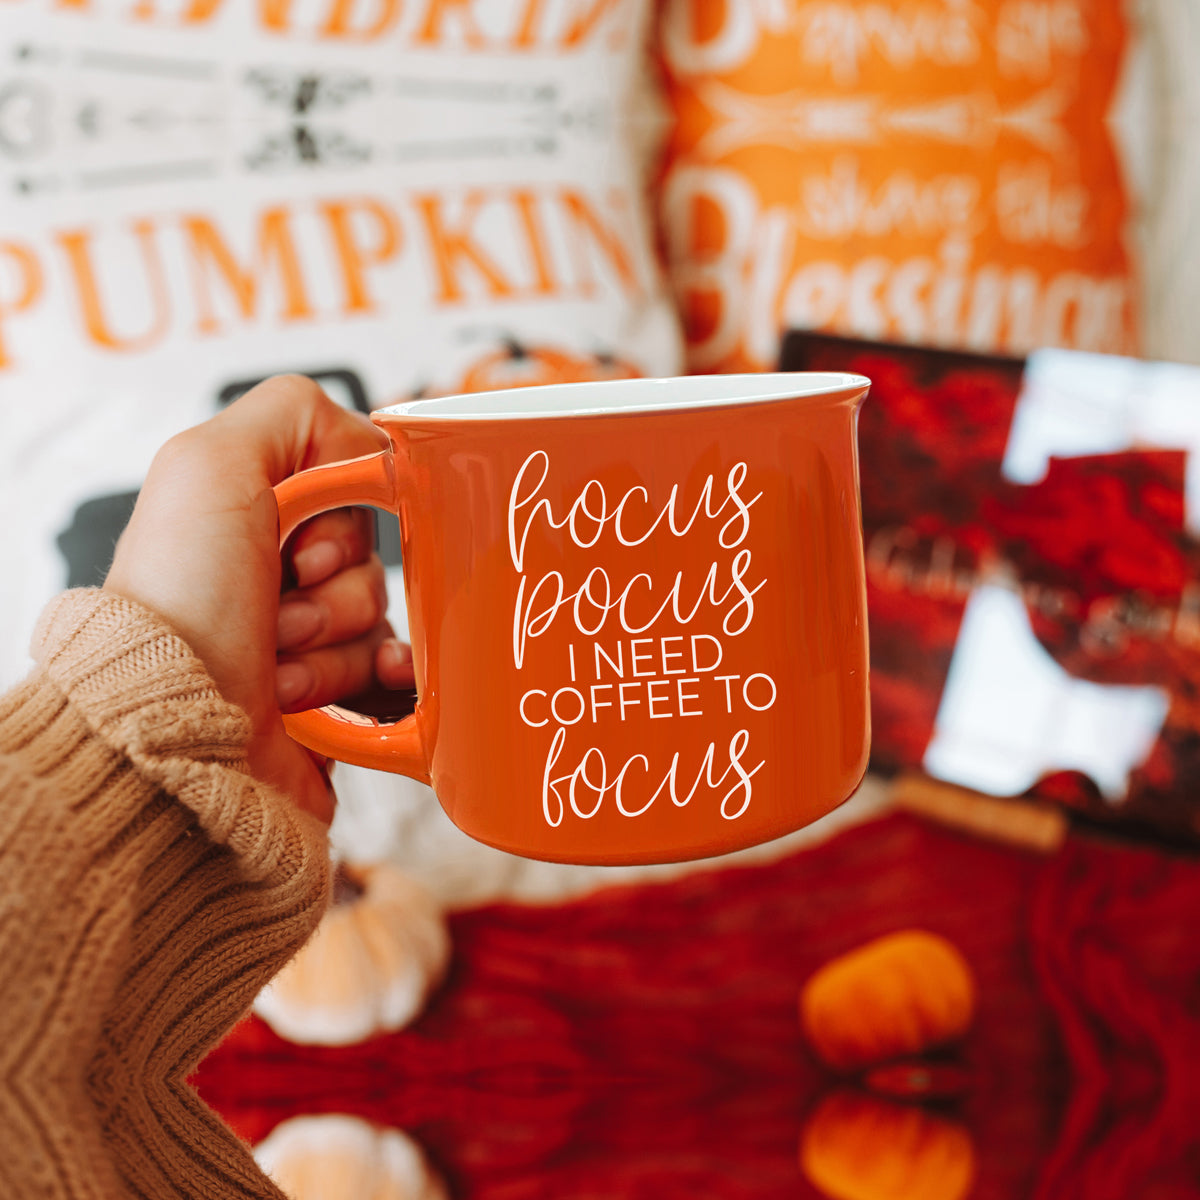 Hocus Pocus Quote Gifts, Funny Halloween Coffee Quotes on Mugs, Orange Ceramic Mug